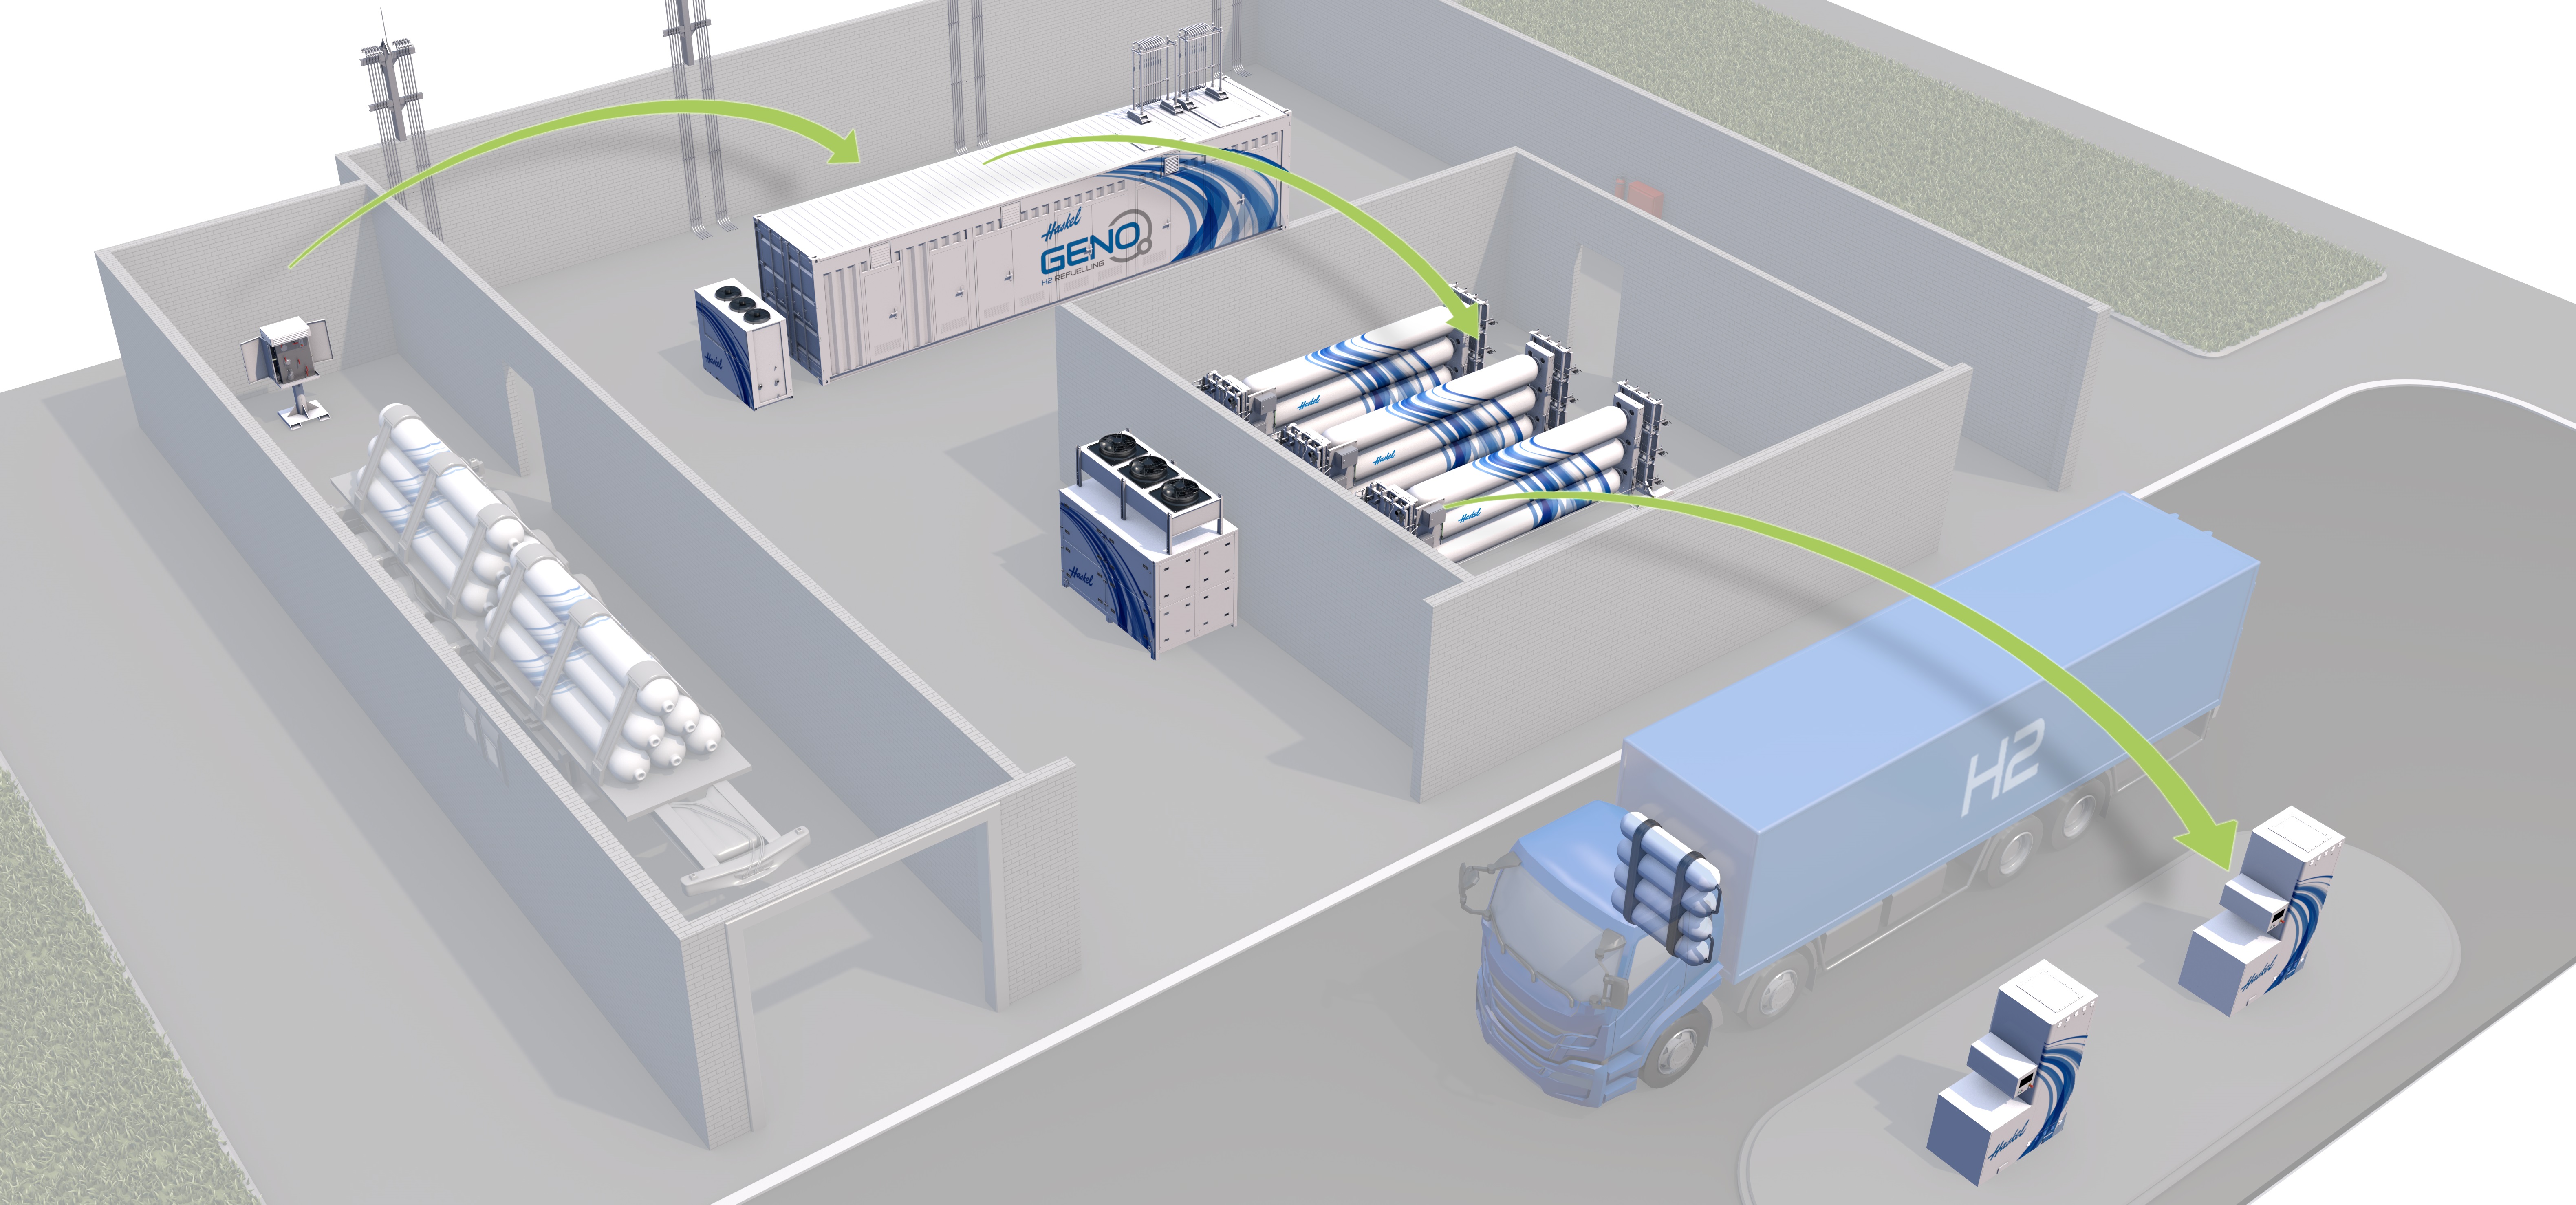 GENO Hydrogen Refuelling Applications